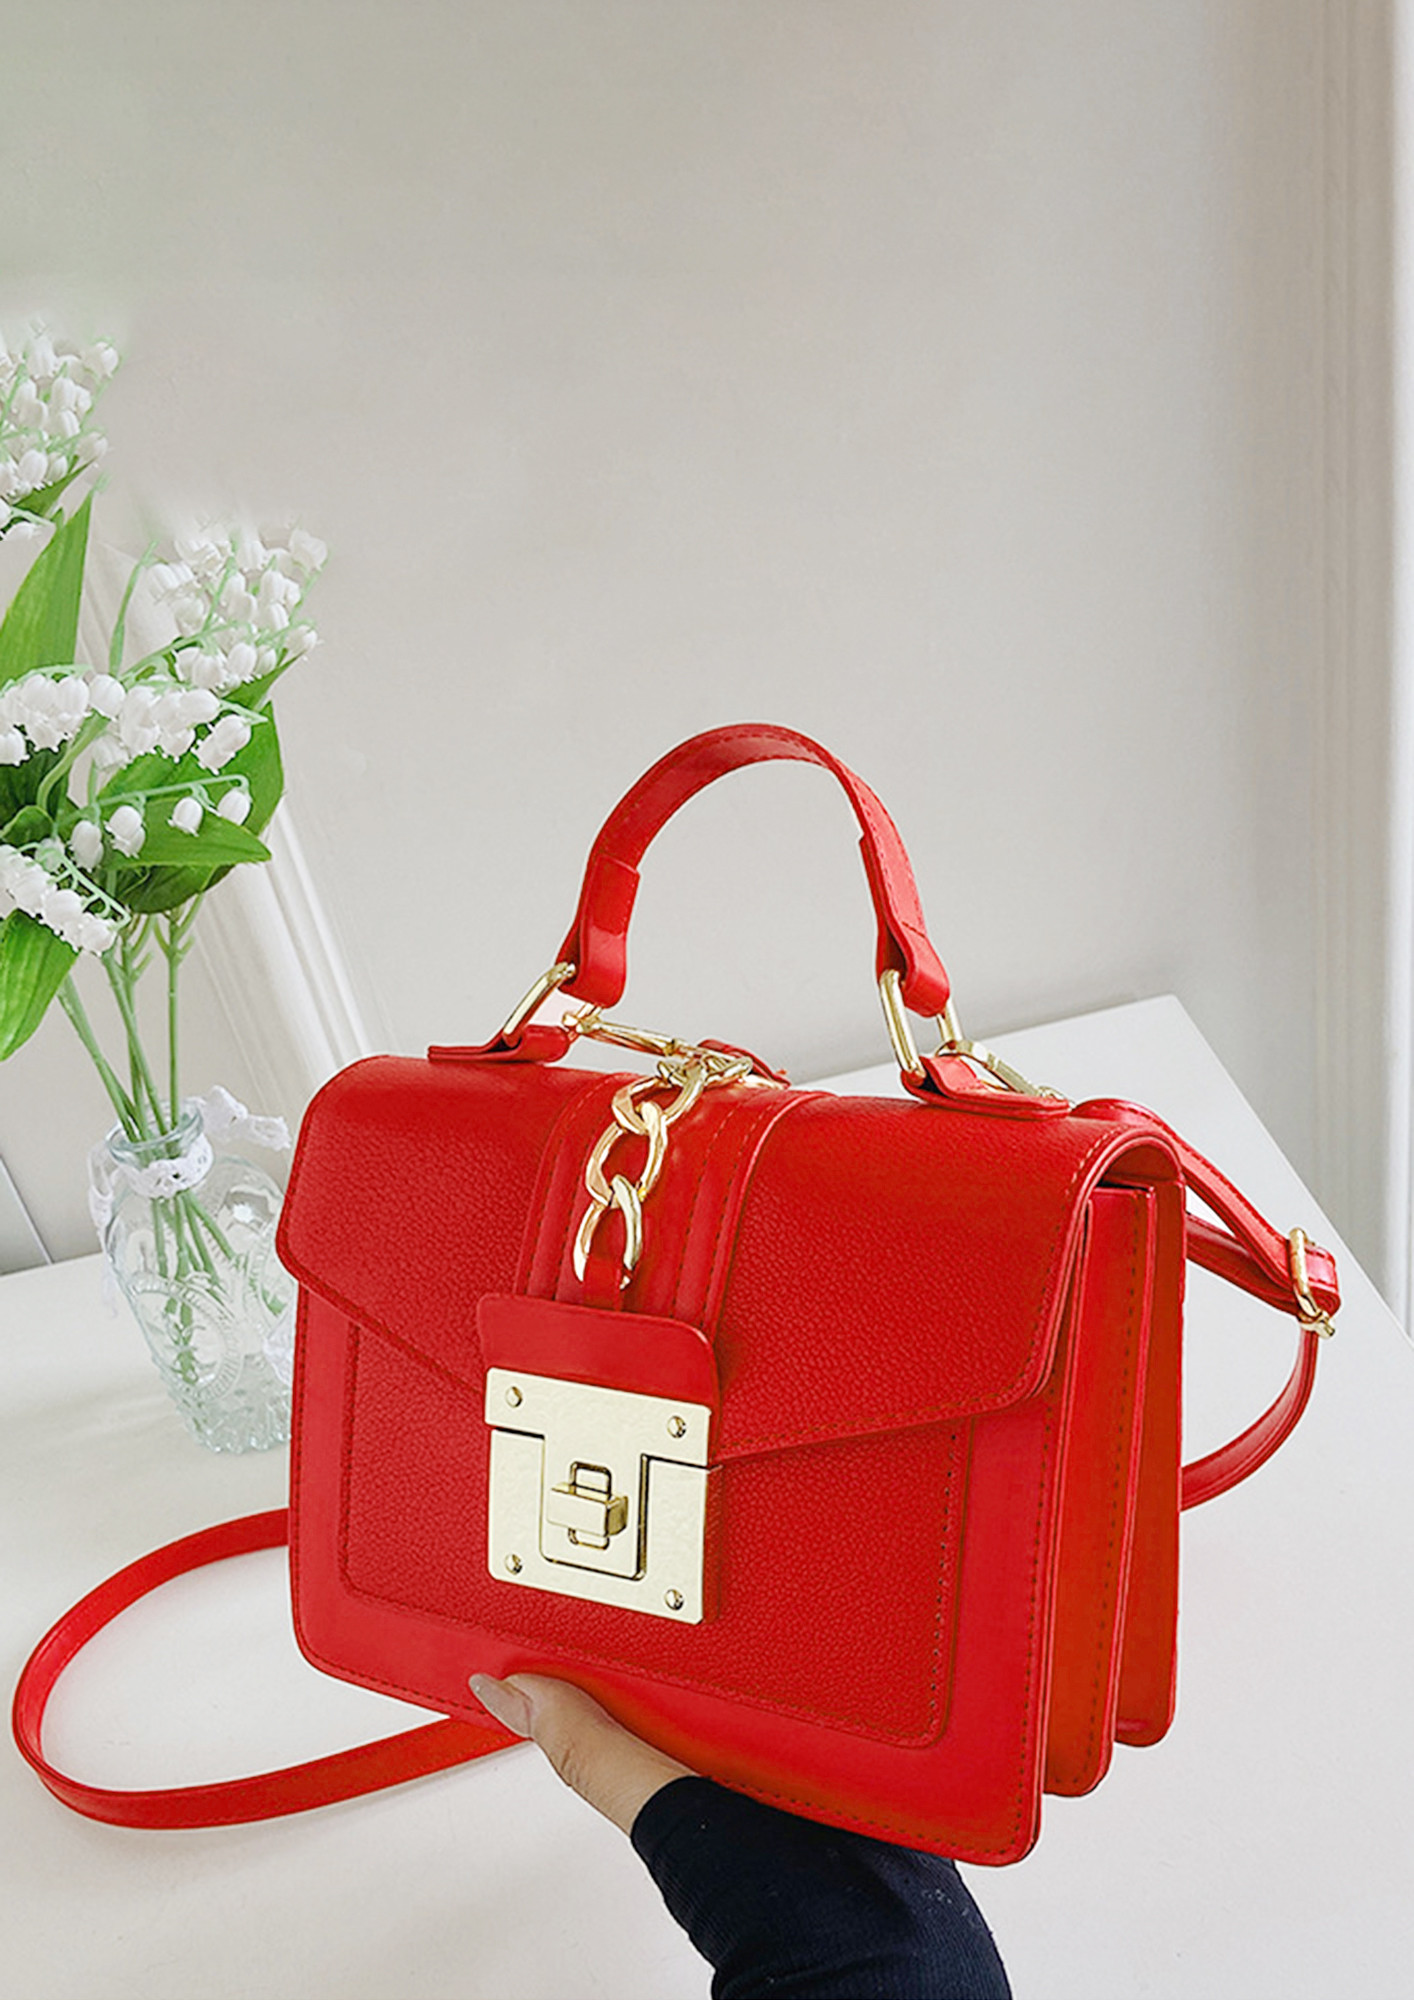 Sorial Large purse handbag Red | eBay